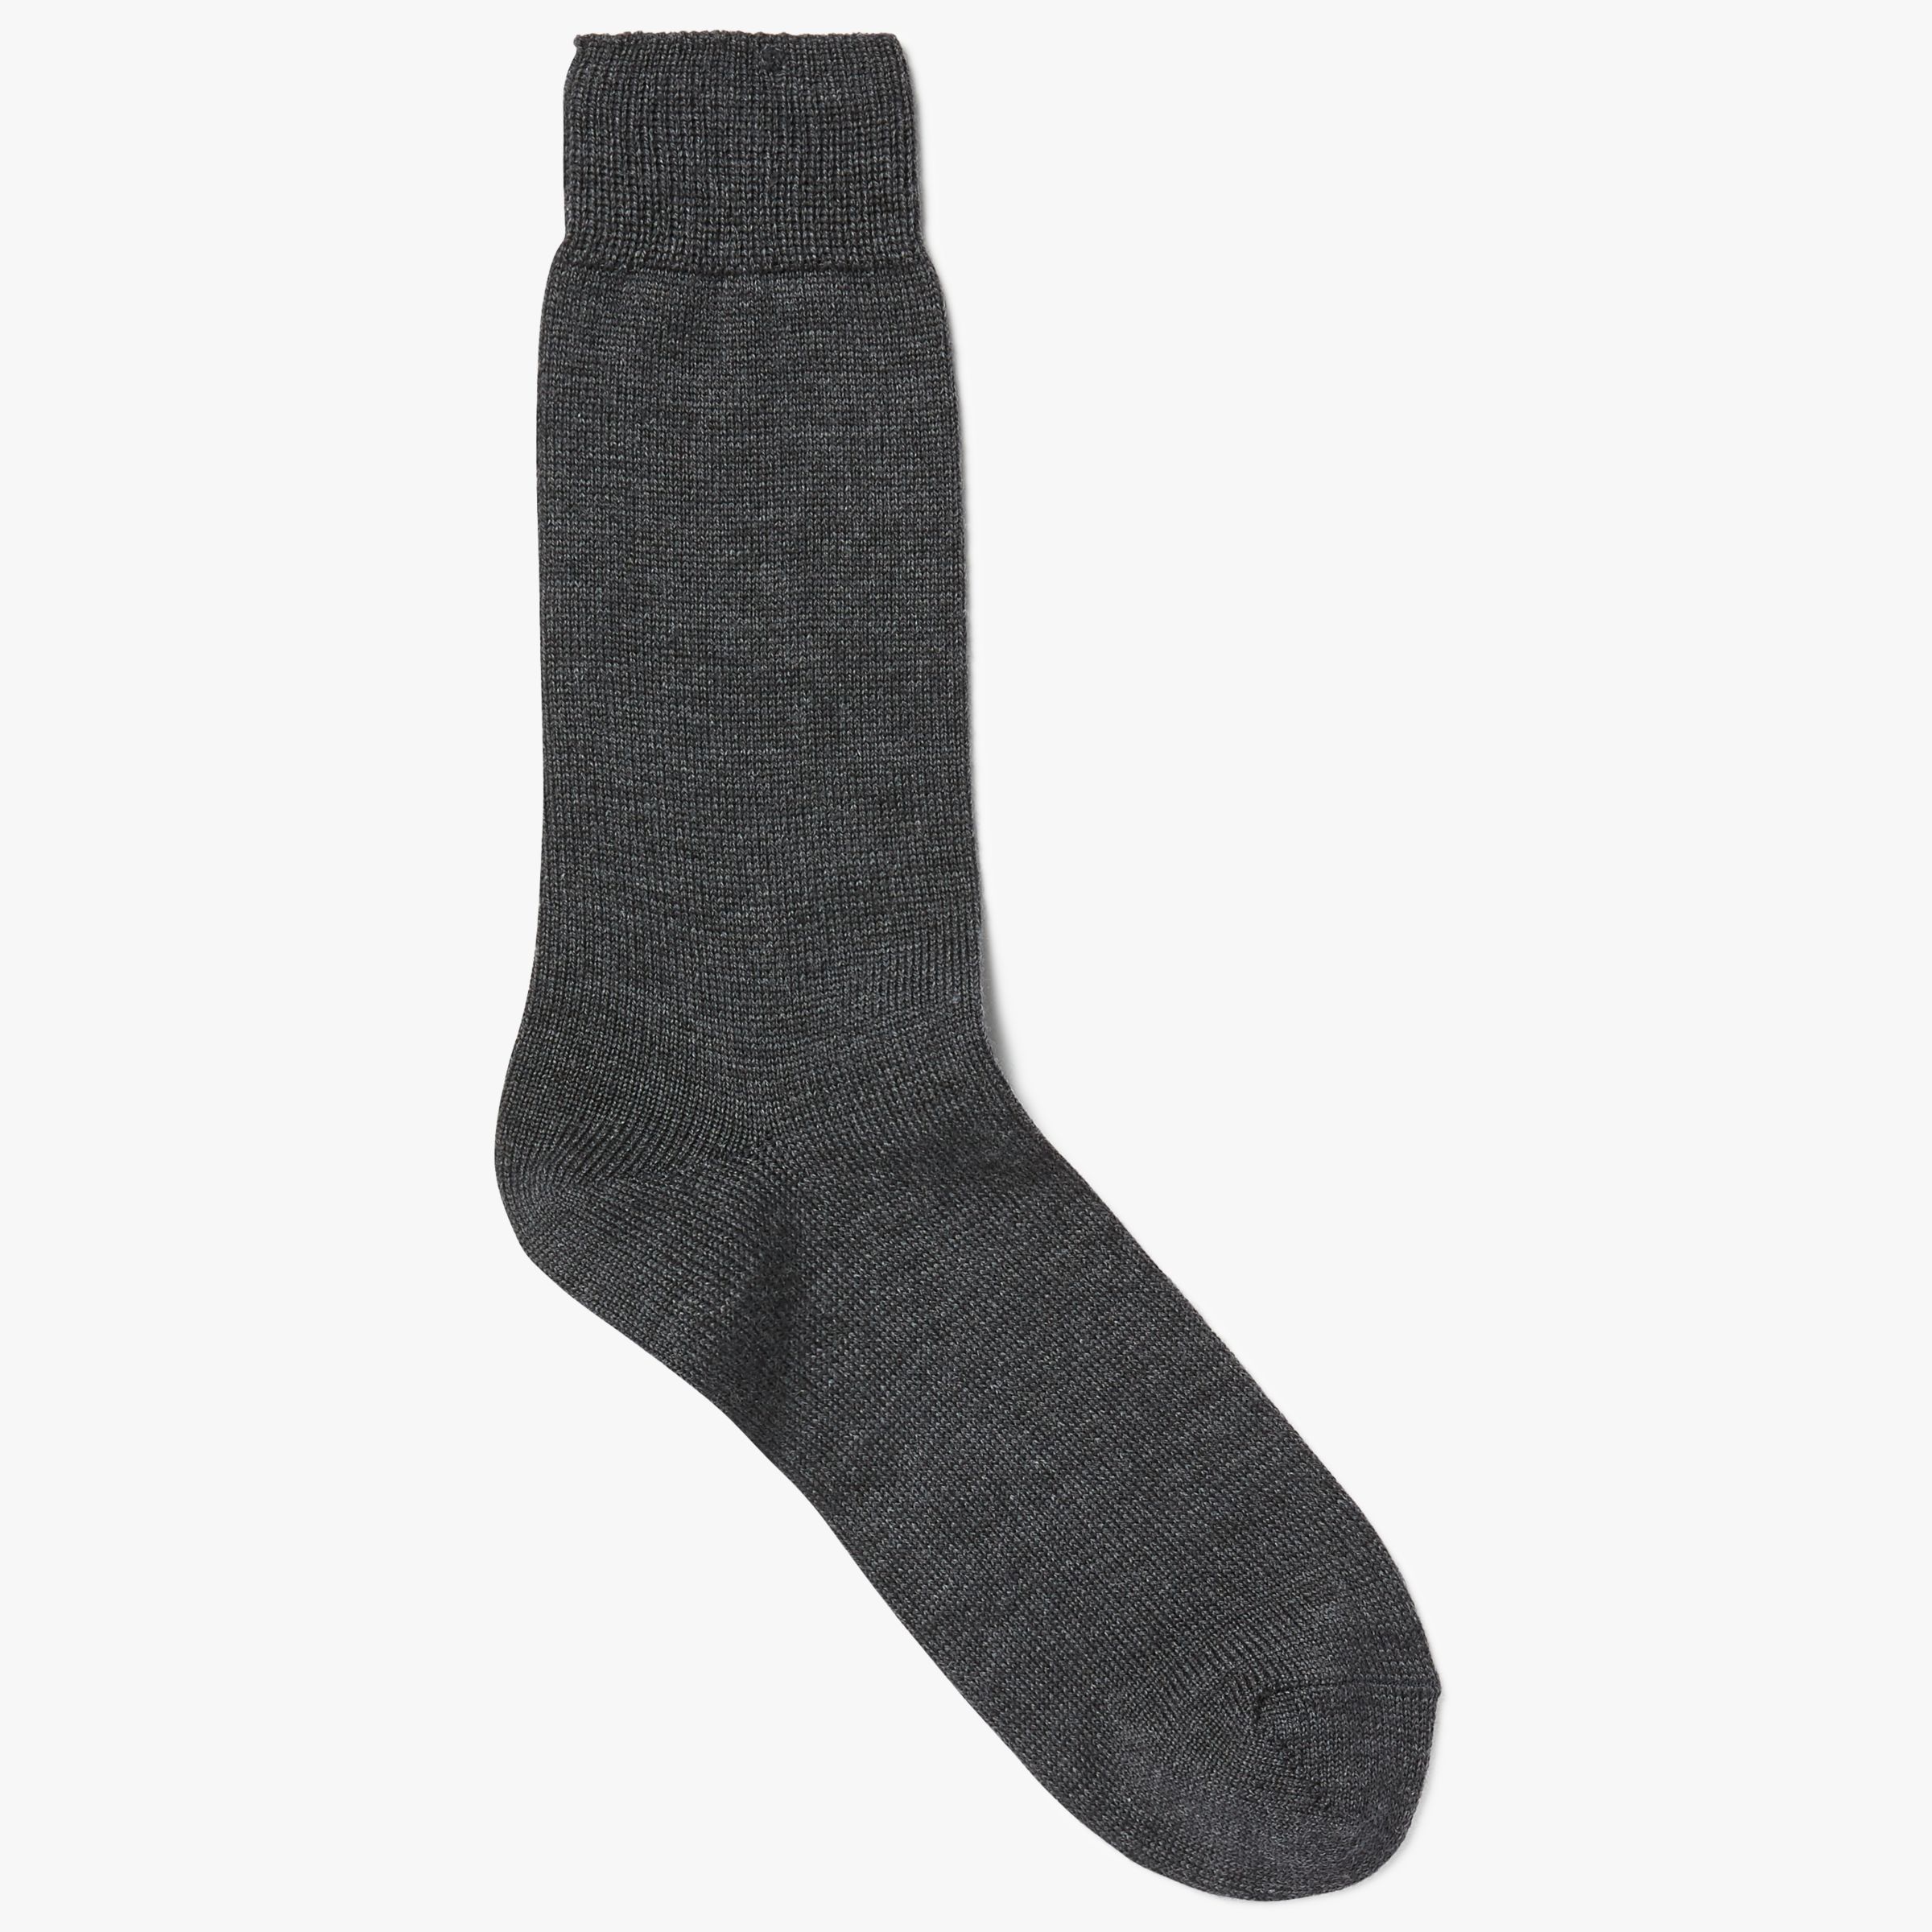 John Lewis & Partners Made in Italy Merino Blend Short Socks, Grey, M